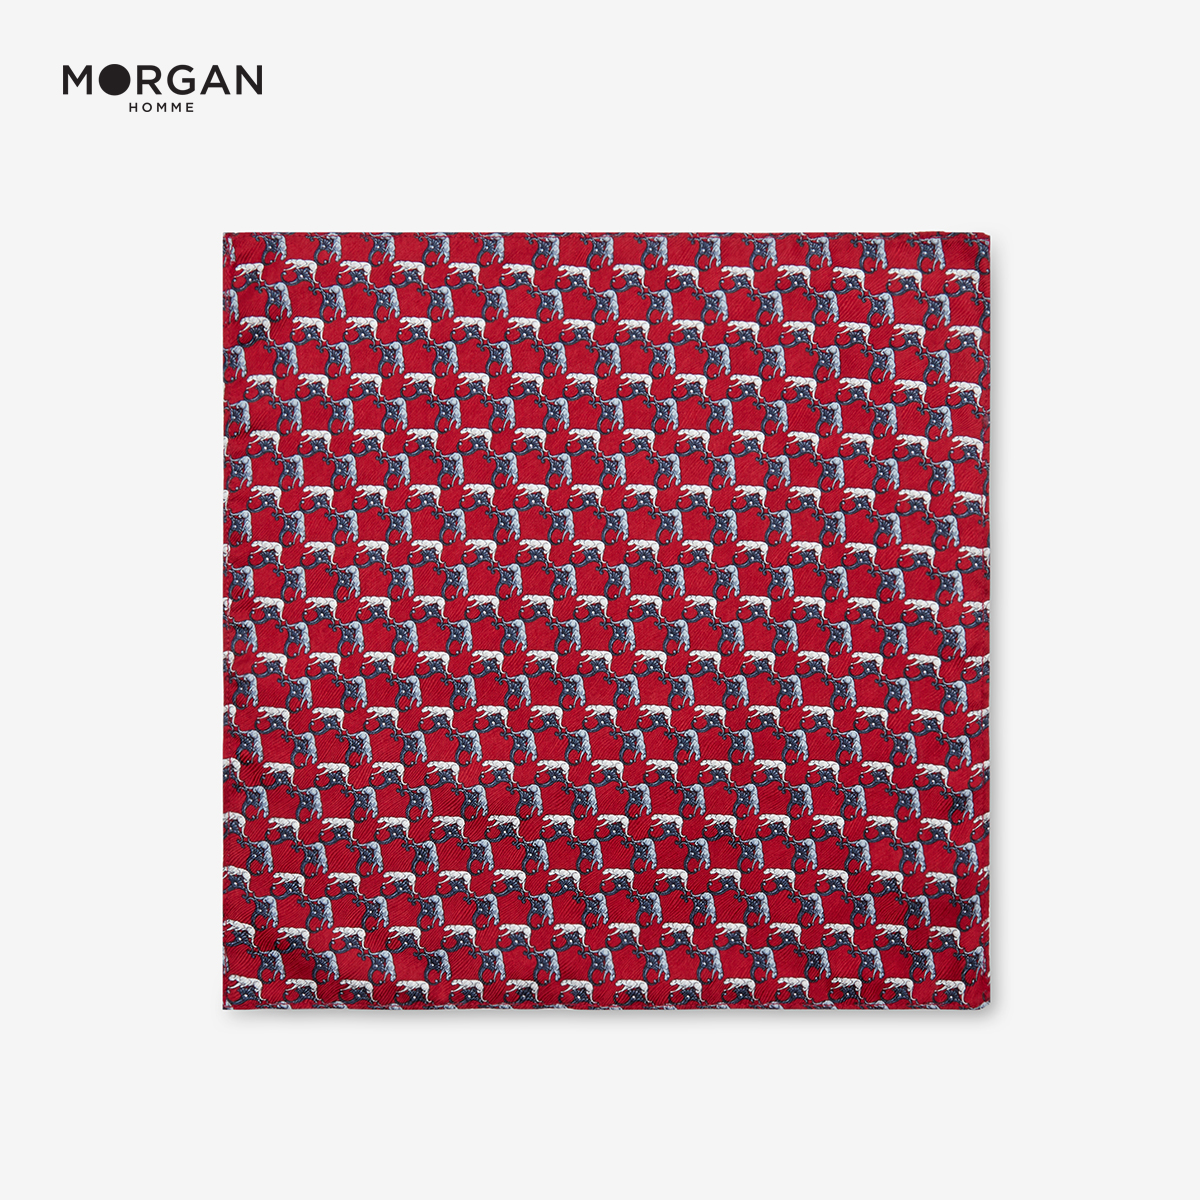 Morgan Homme ผ้าเช็ดหน้า Pocket square ใส่กระเป๋าสูทออกงาน รุ่น BAZOO 03 สีแดง